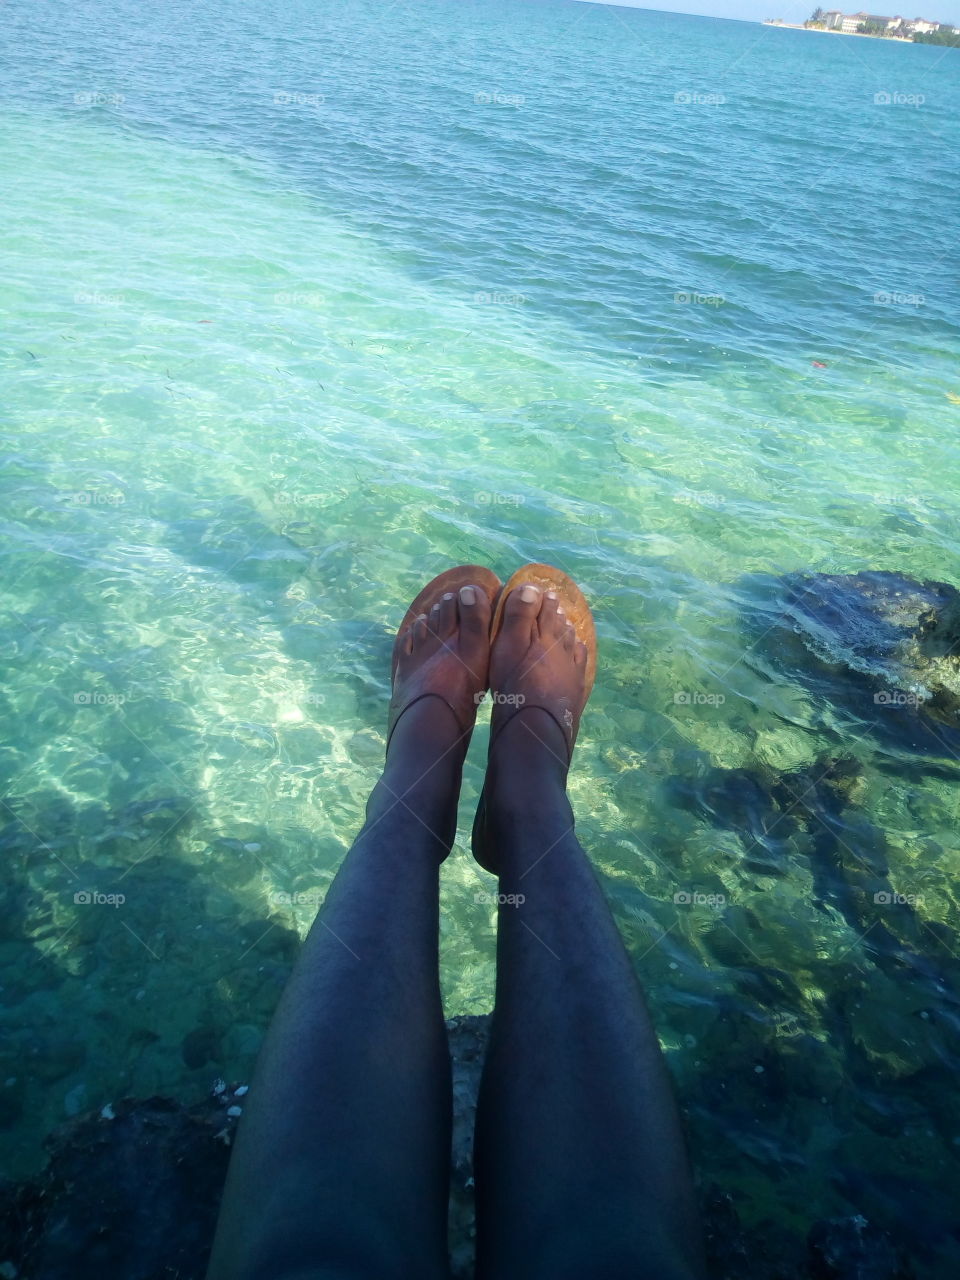 Beach in the morning #IslandLife #JamaicaThroughMyEyes